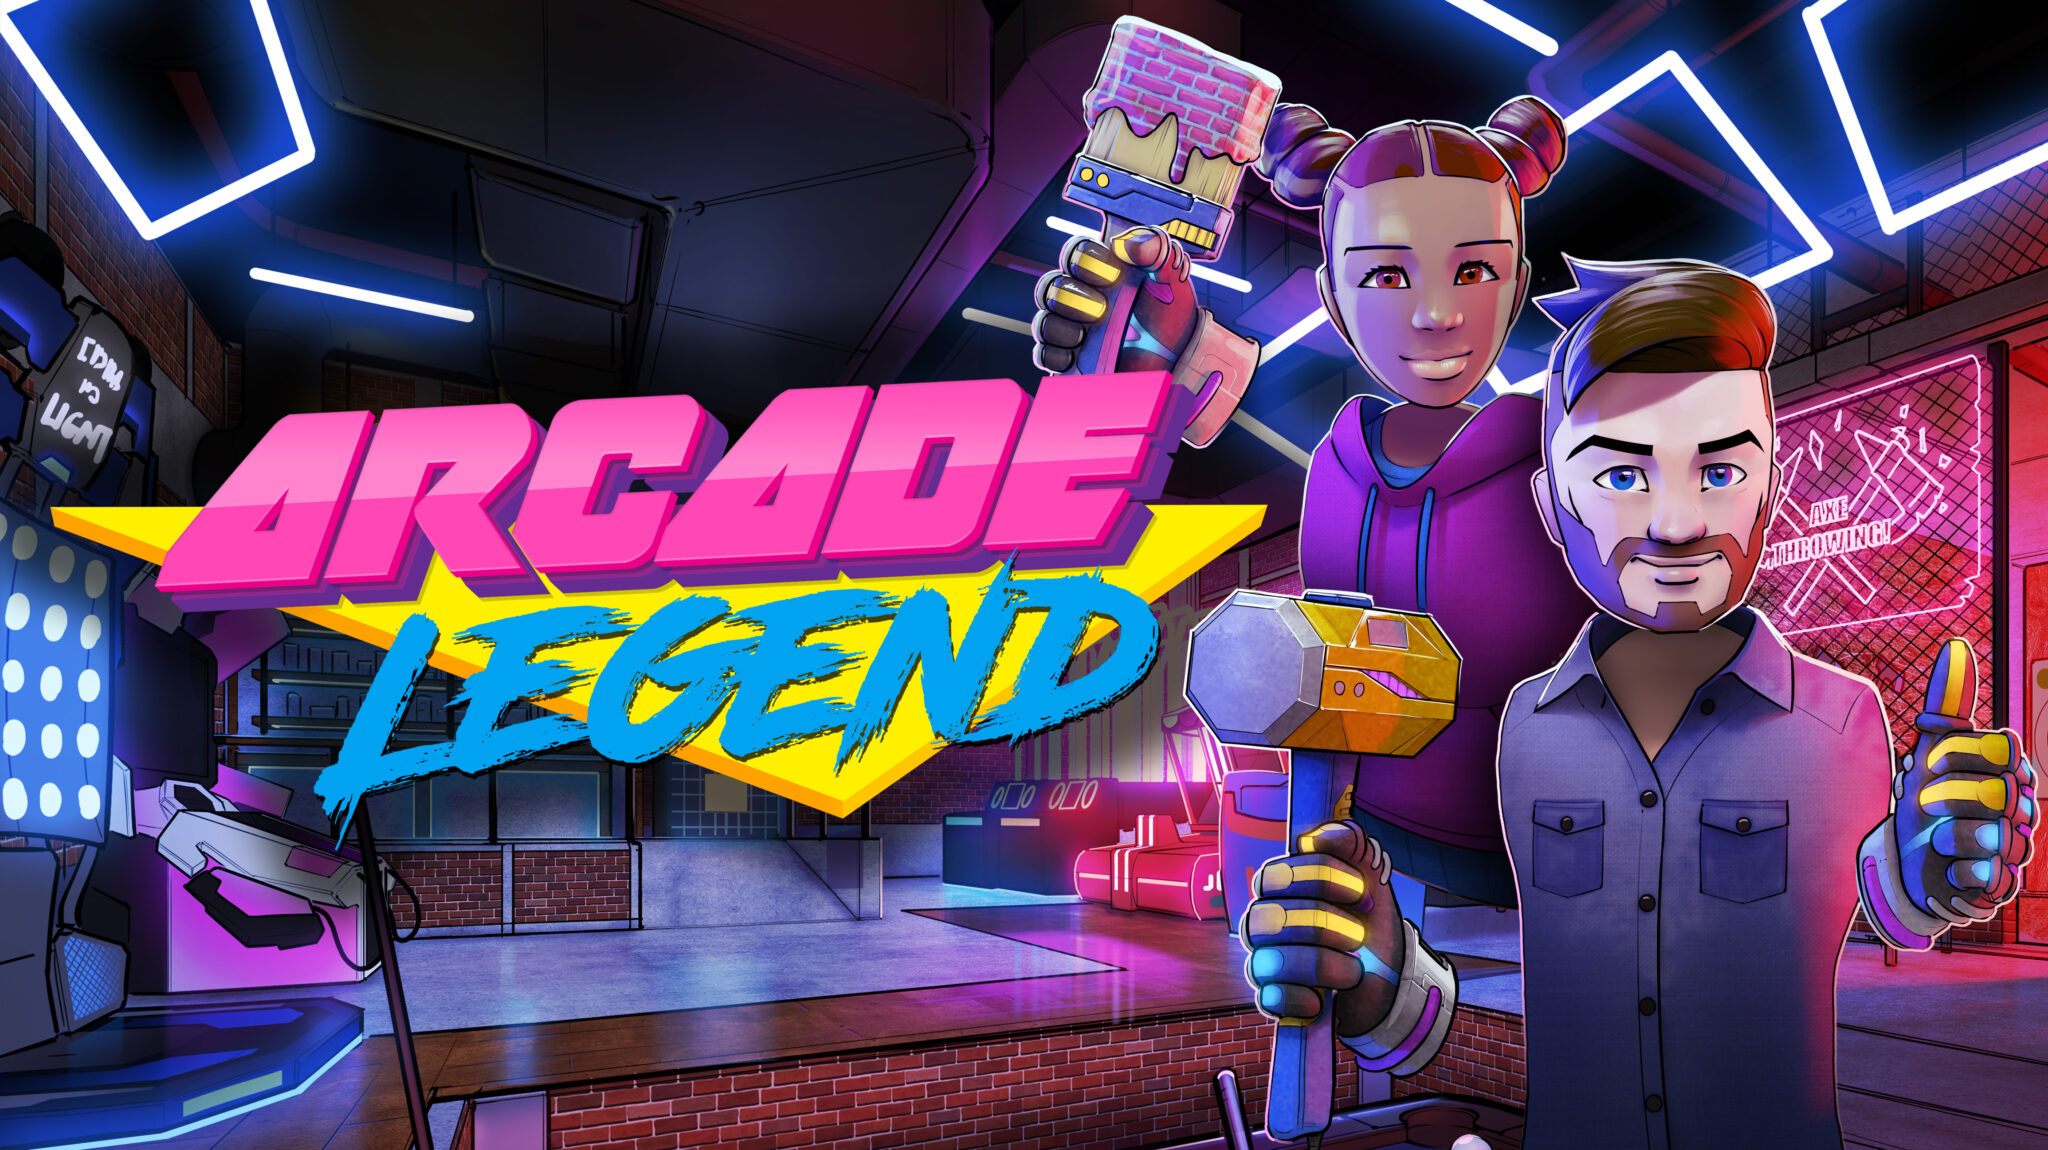 Legendary vr. Arcade Legend Oculus. Arcade Legend Oculus Quest. Arcade Legend v2.6. Drum Legend VR.